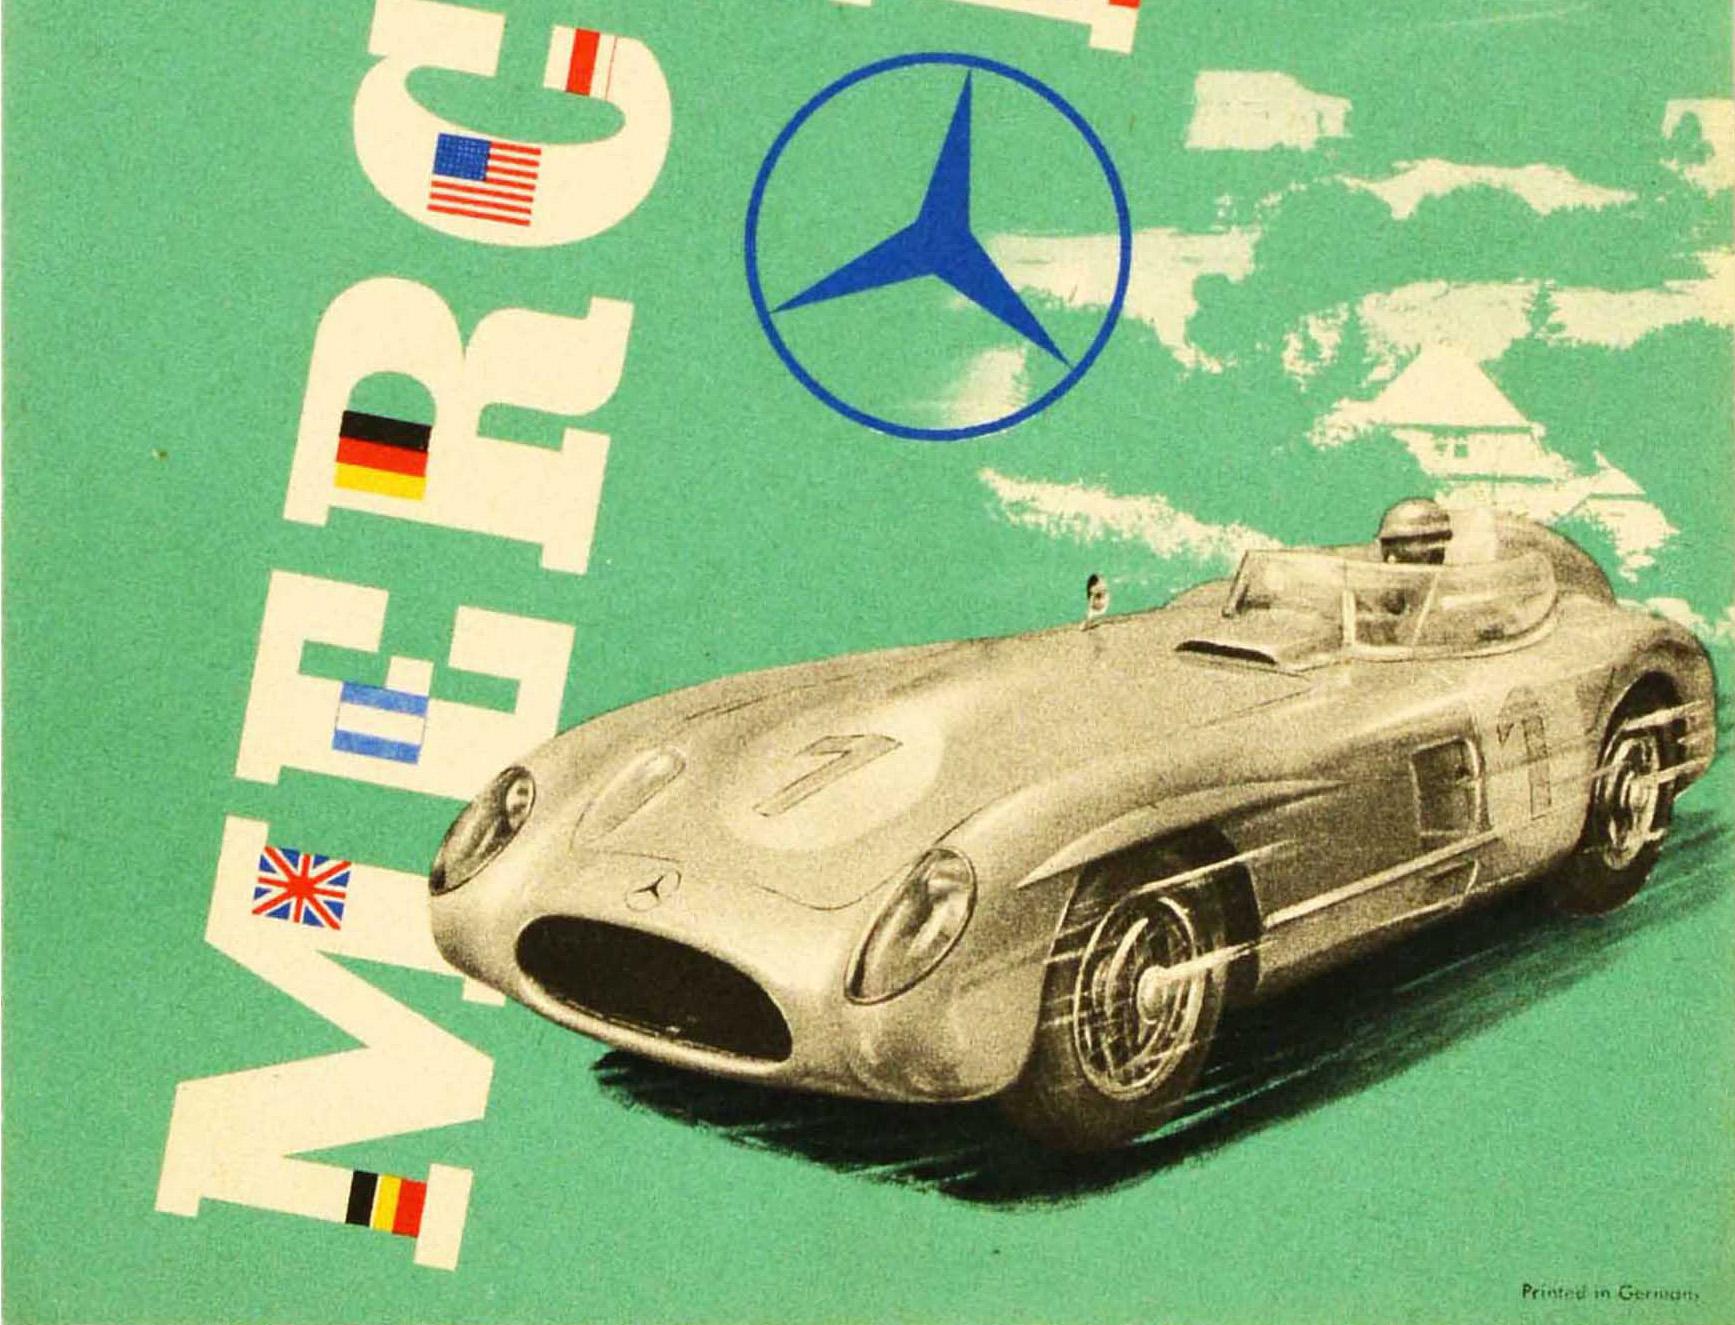 Original Vintage Motorsport Poster Mercedes Benz Victory ADAC 1955 300SLR Fangio - Green Print by Unknown